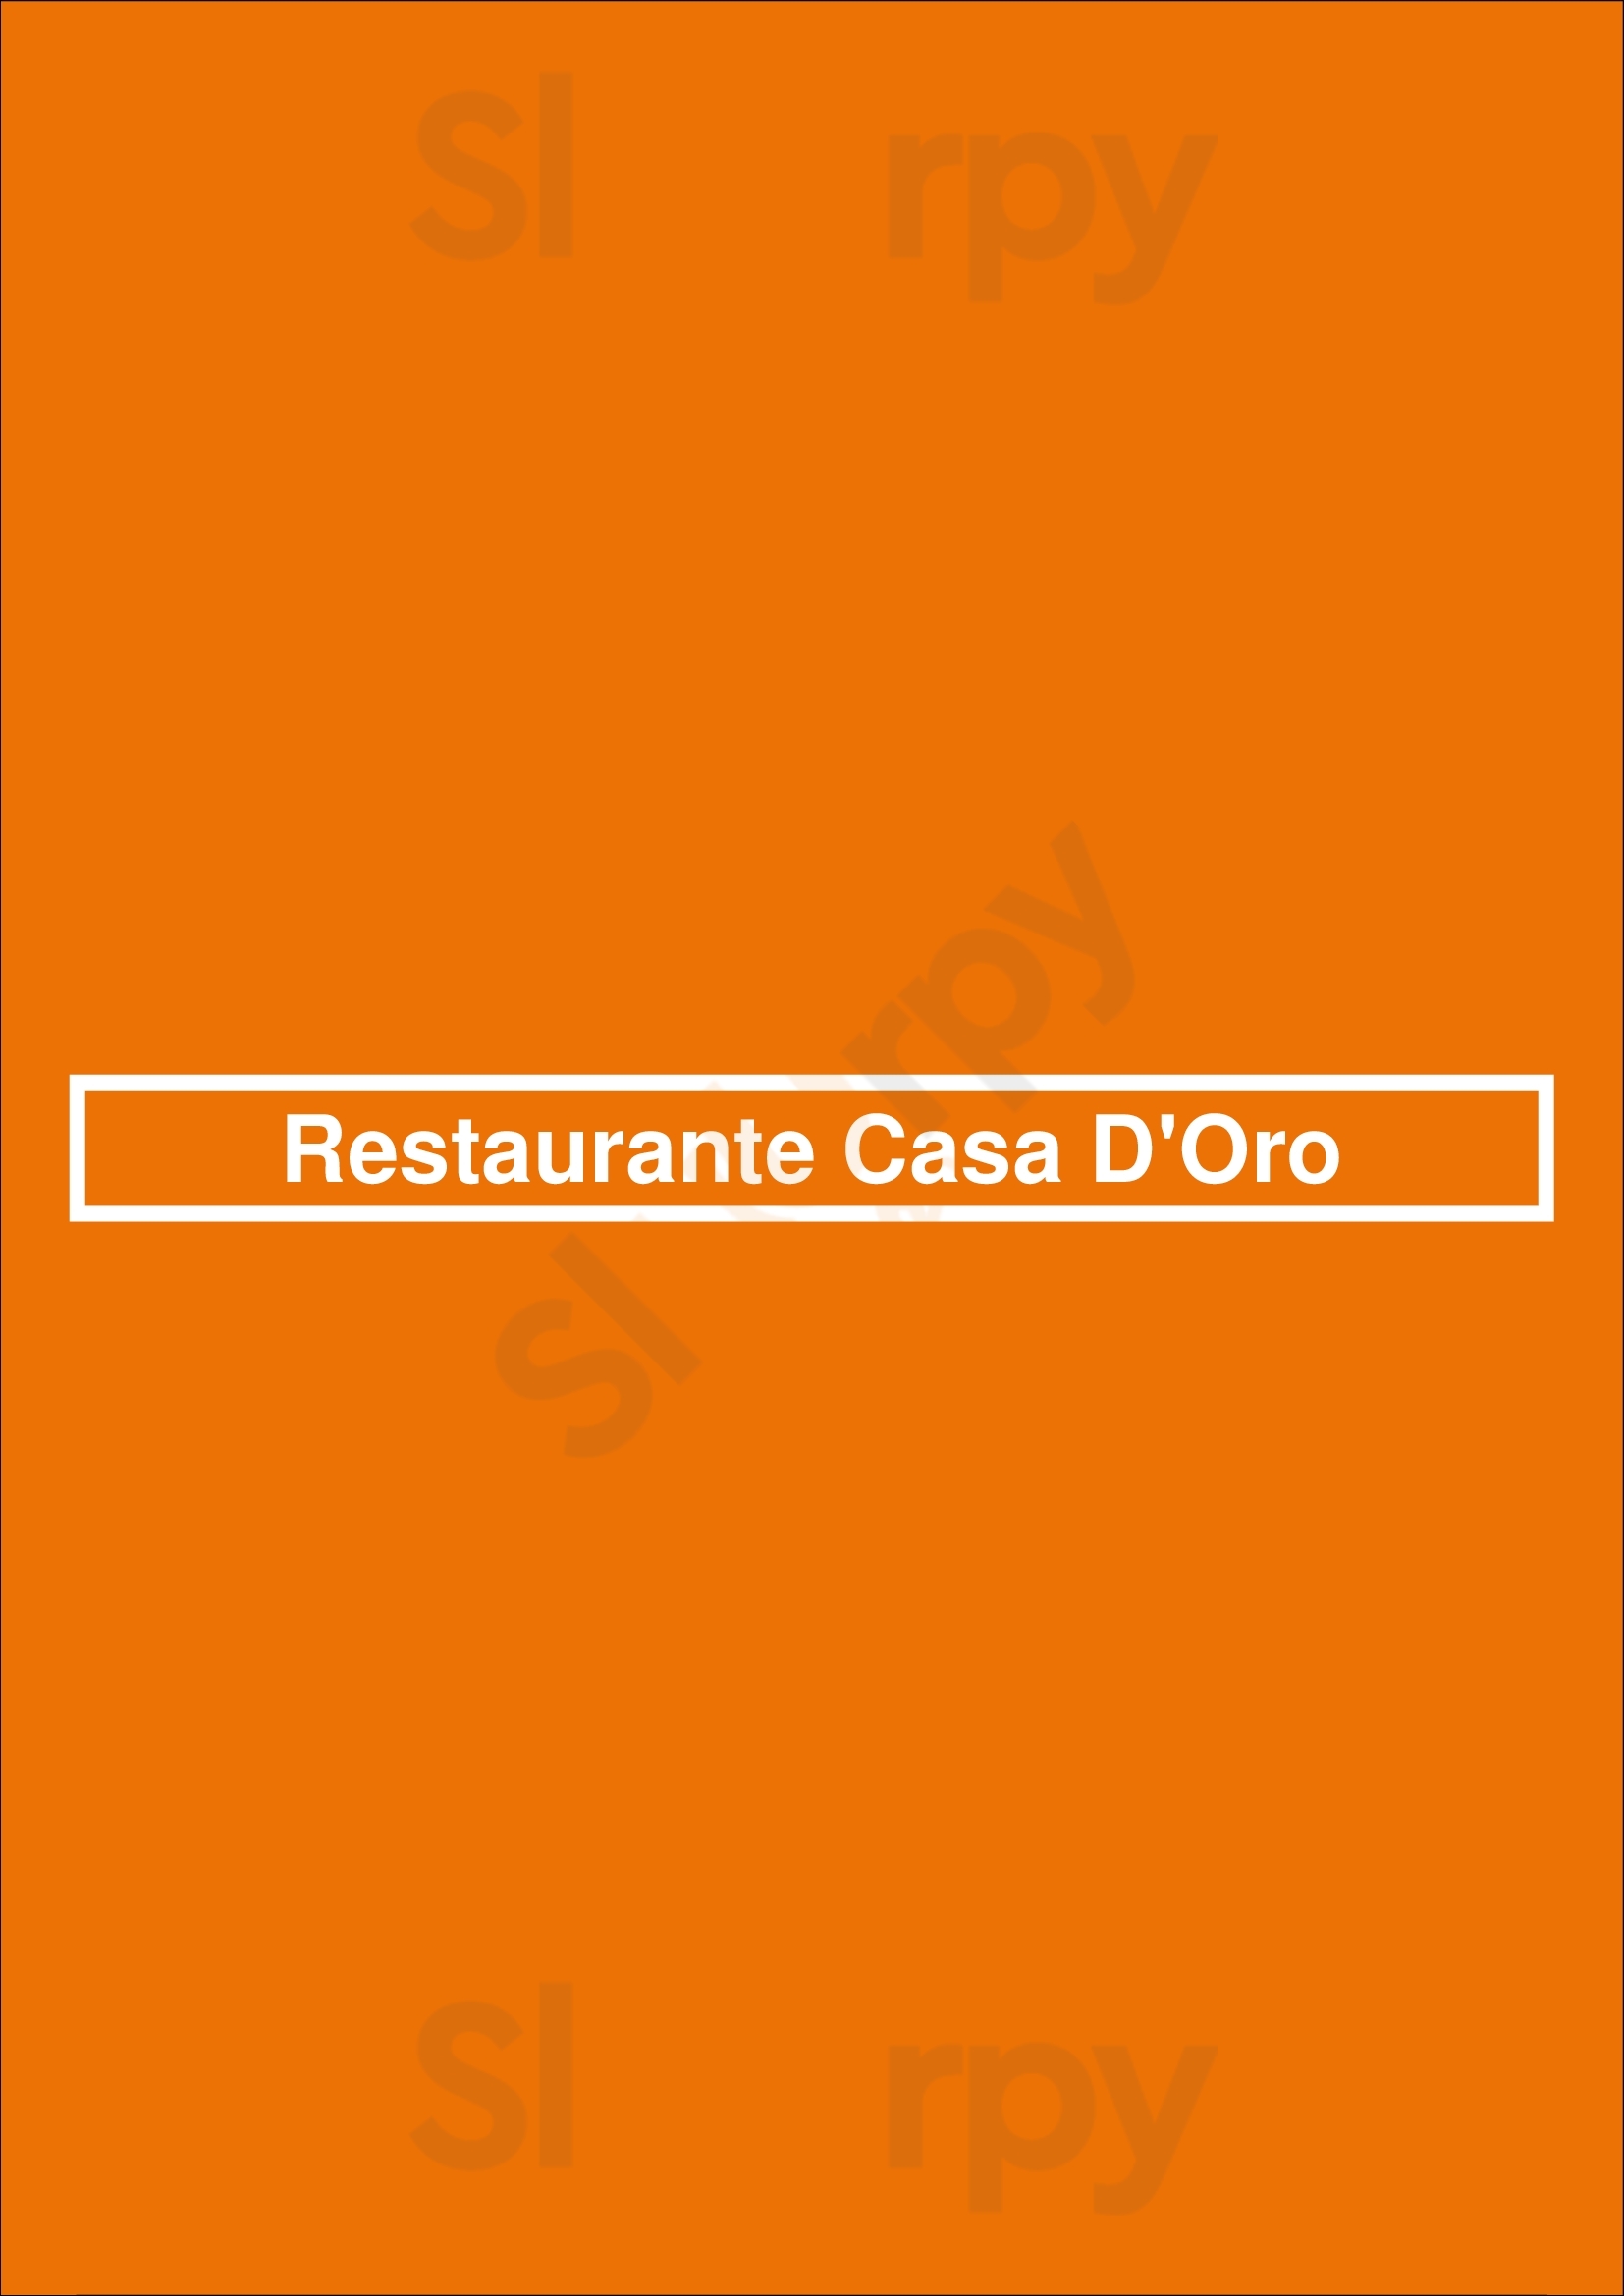 Restaurante Casa D'oro Porto Menu - 1